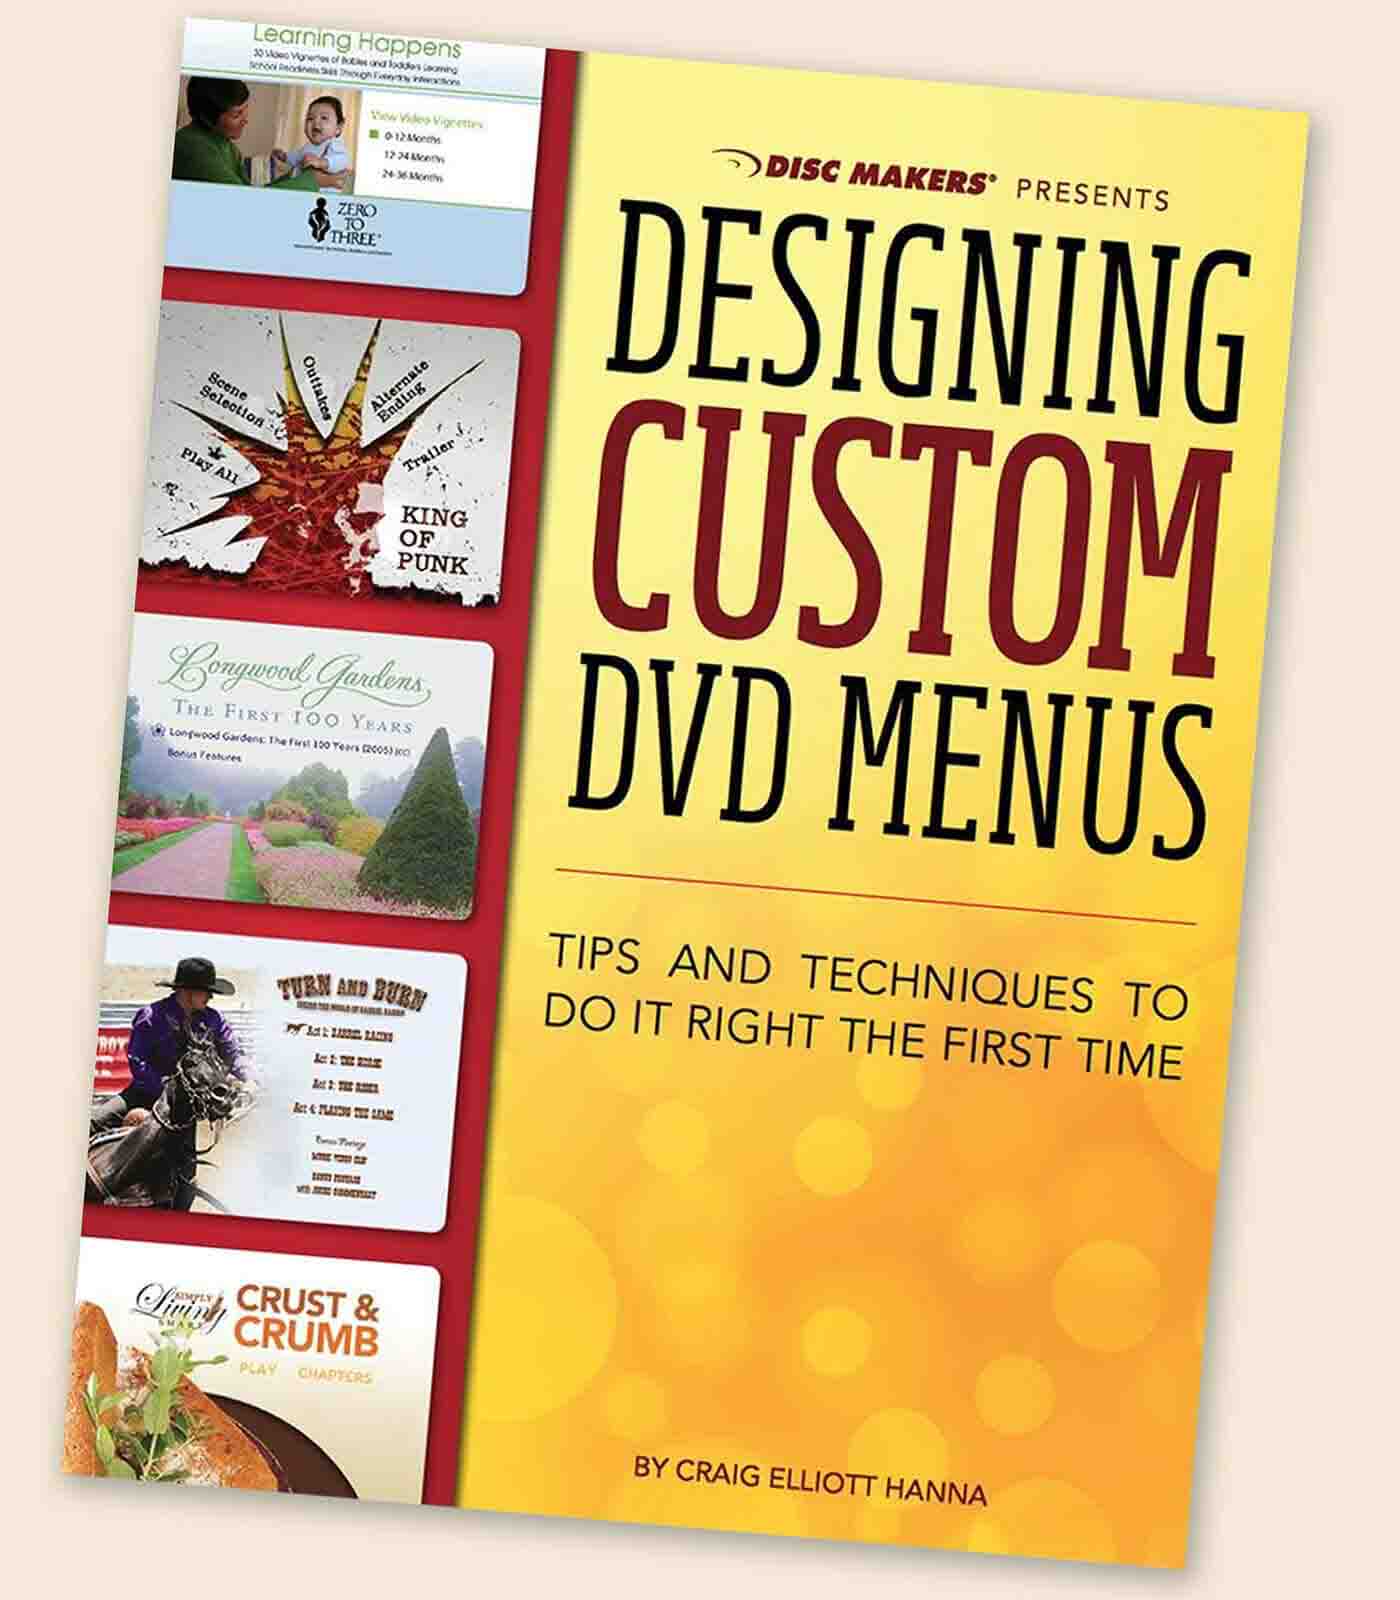 Design your own DVD menu